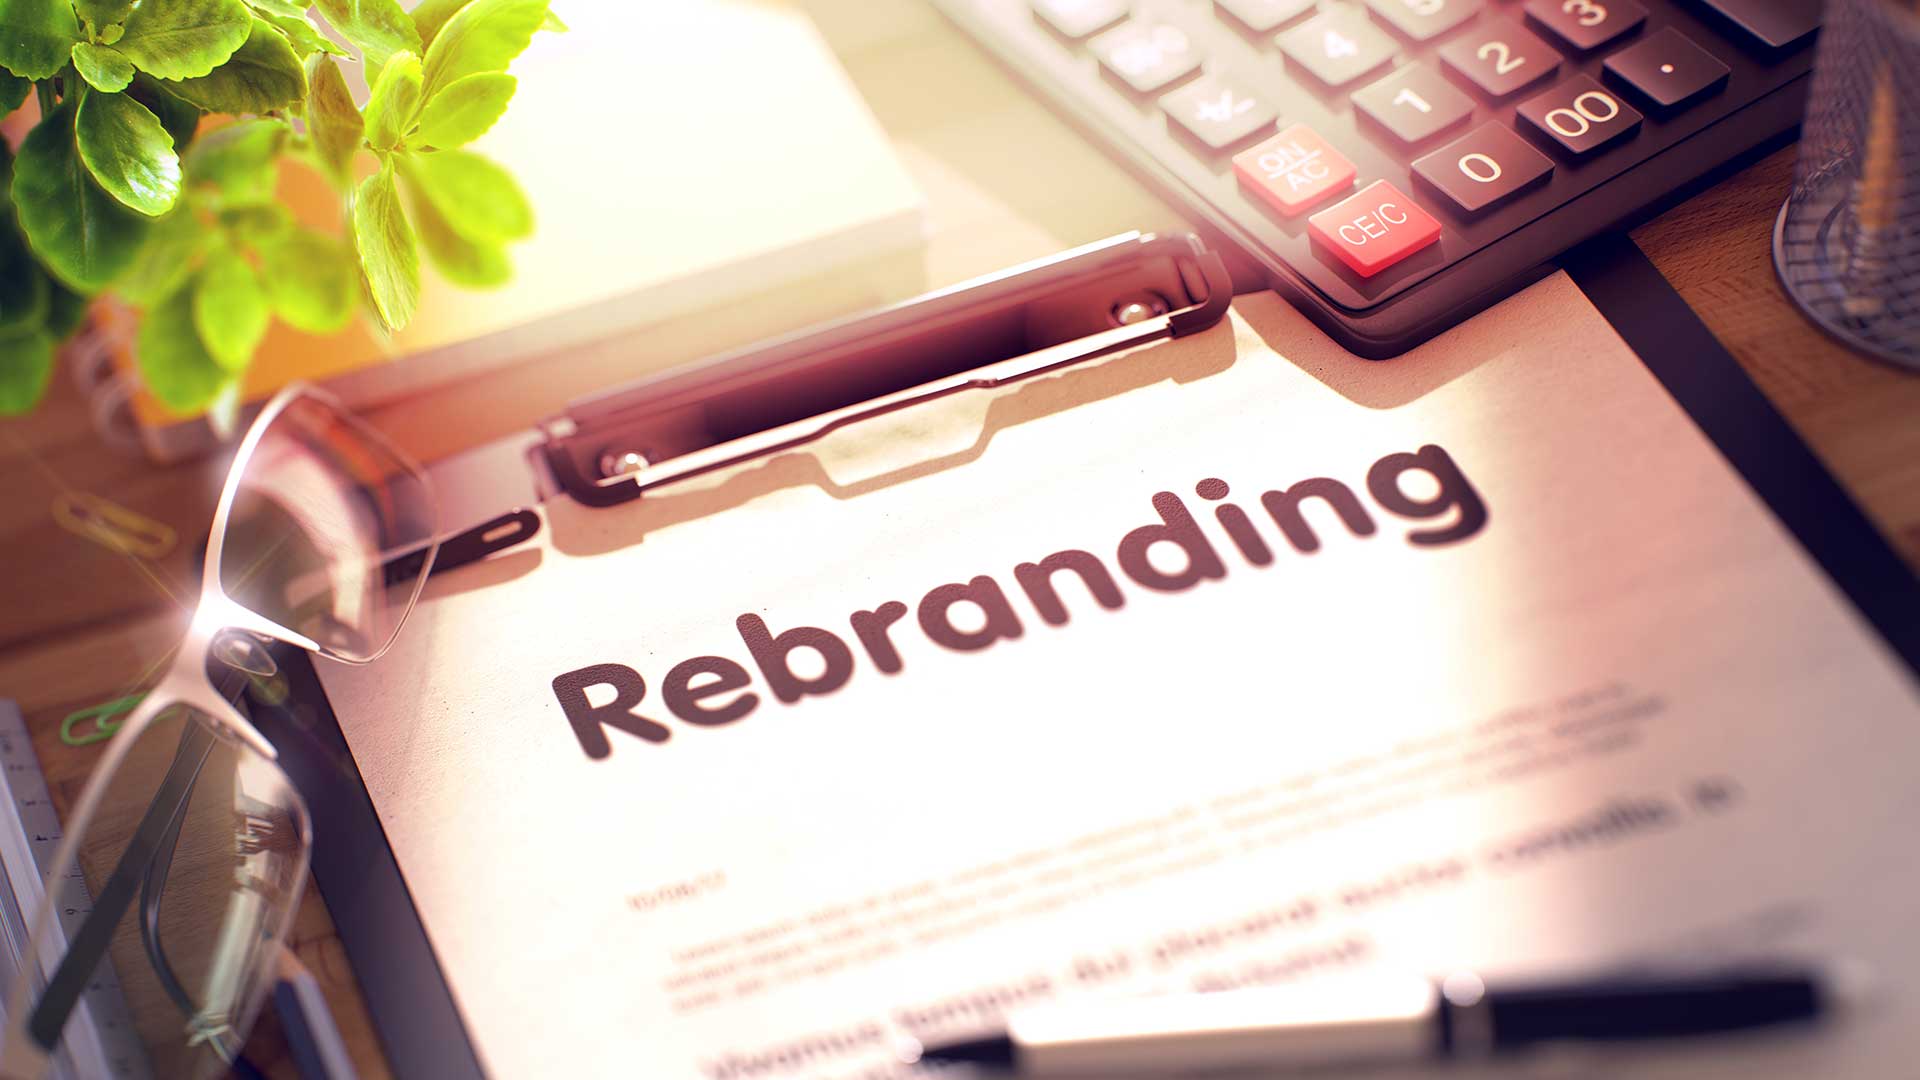 What is Rebranding?